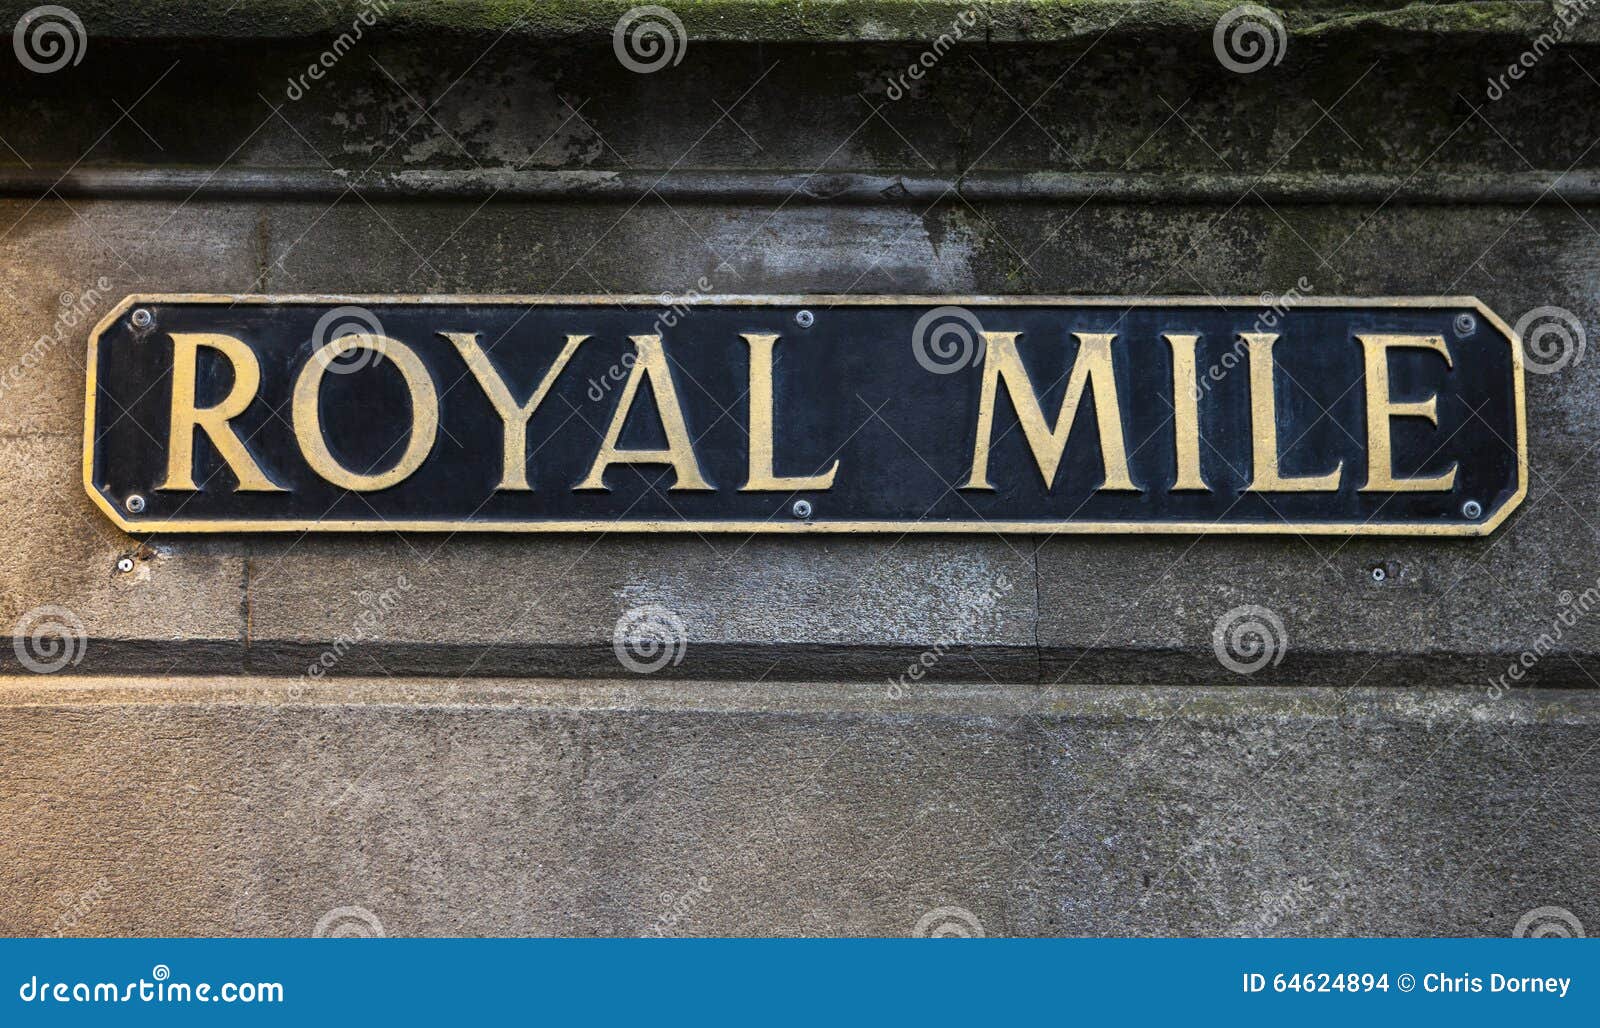 royal mile in edinburgh